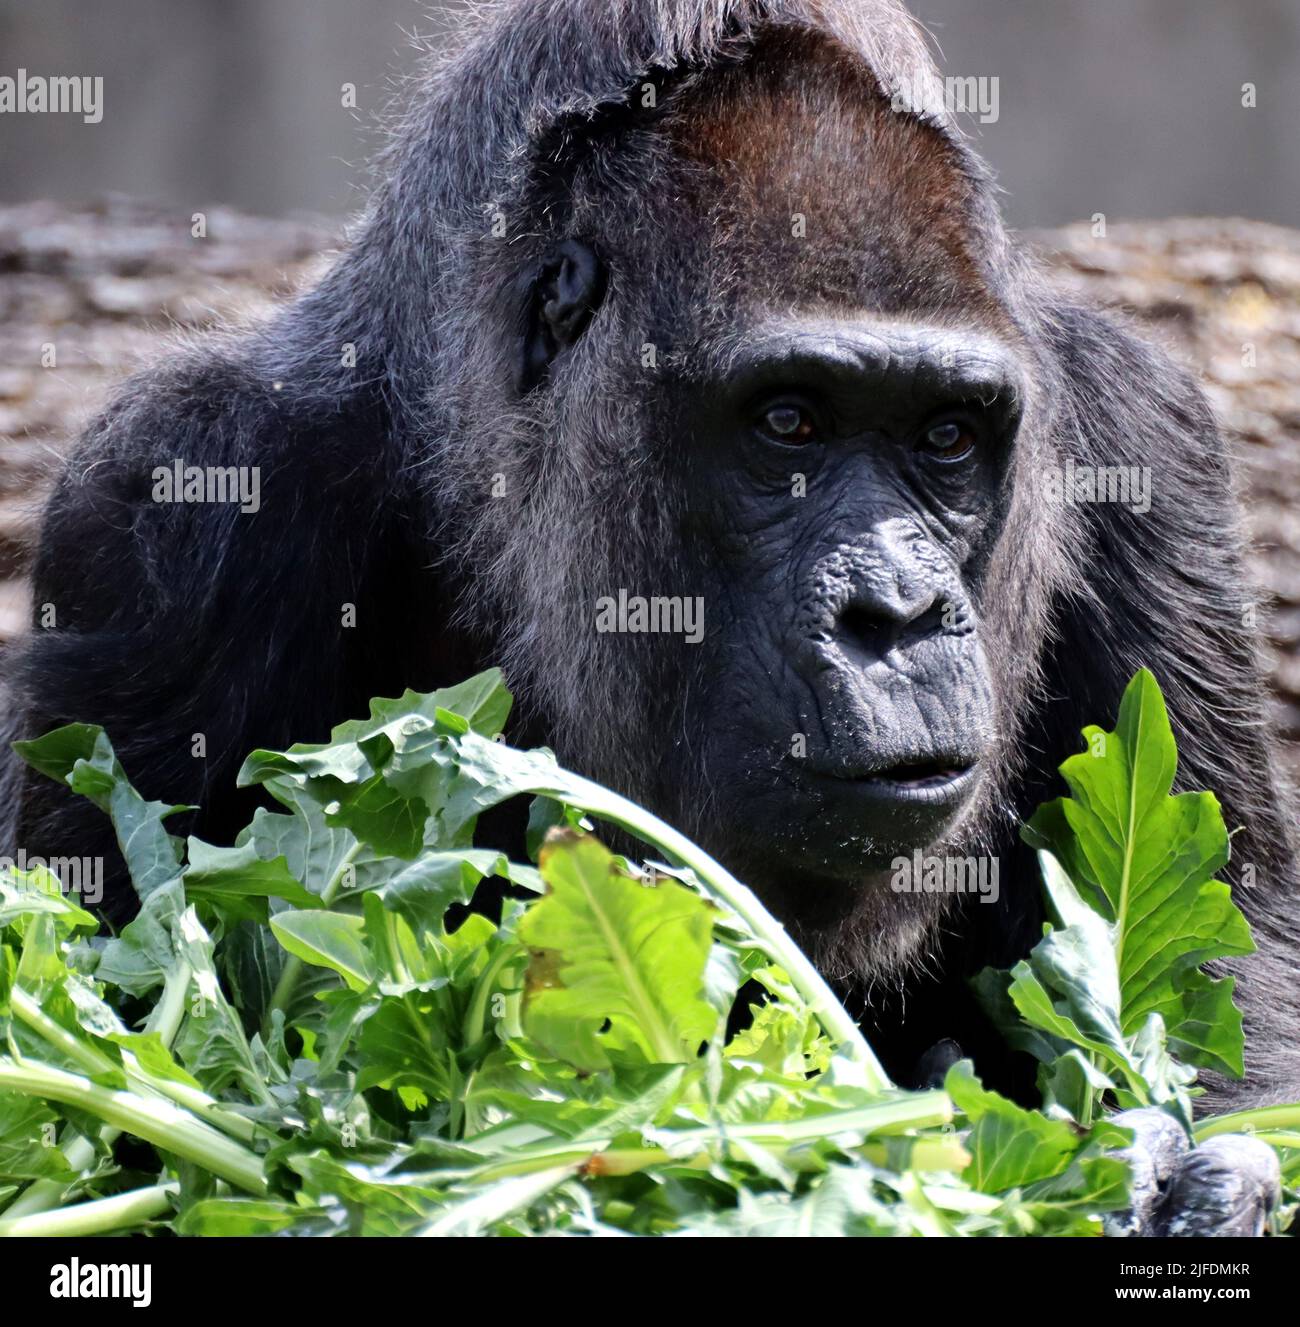 https://c8.alamy.com/comp/2JFDMKR/a-closeup-shot-of-a-giant-black-gorilla-who-is-about-to-eat-green-2JFDMKR.jpg